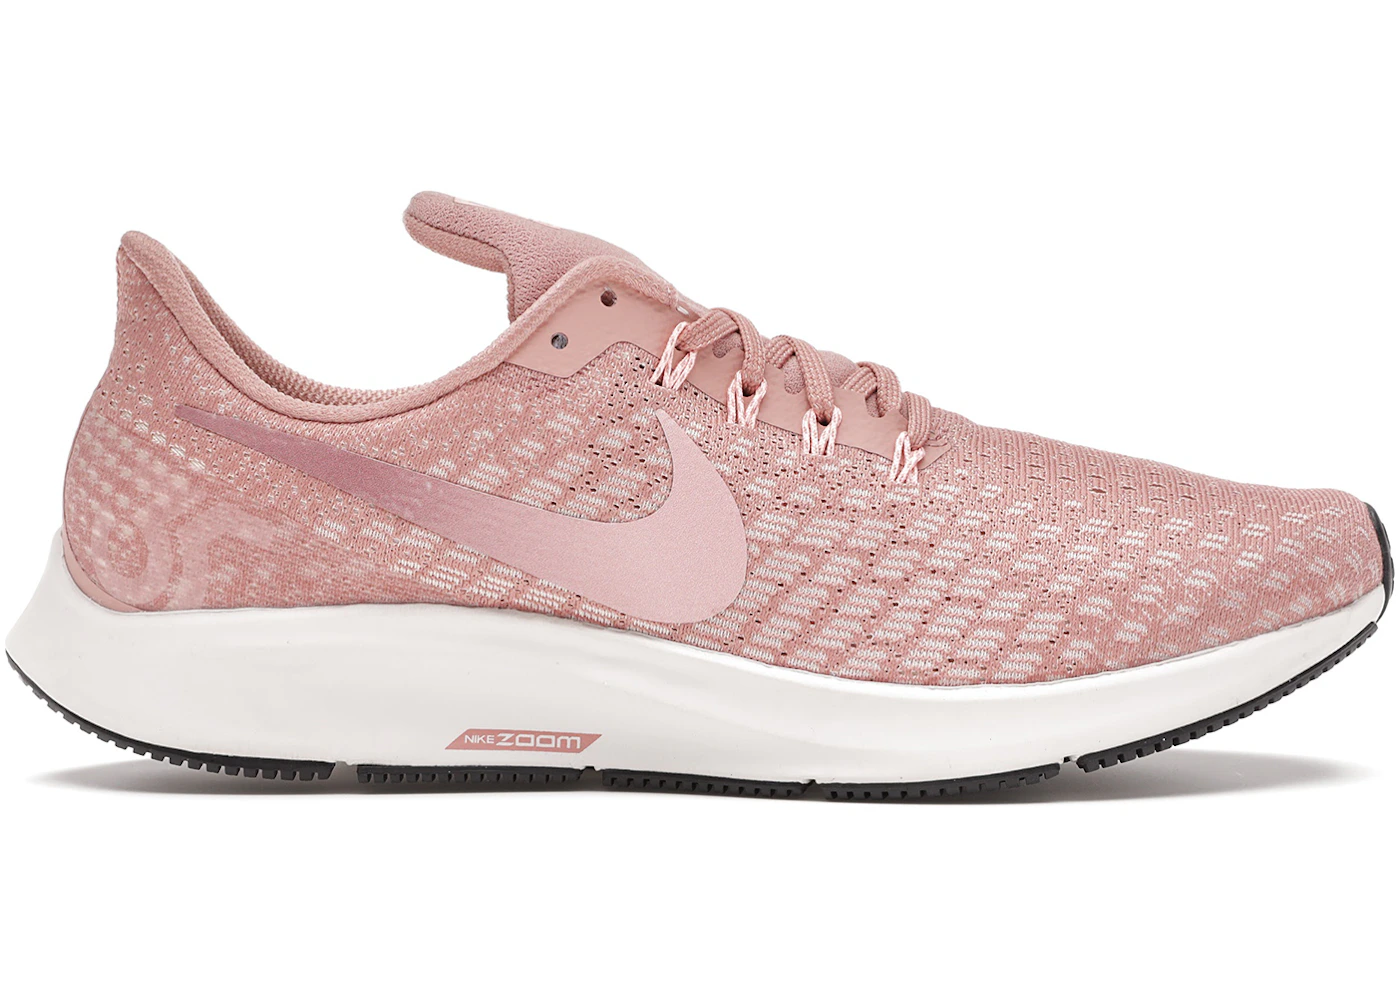 Nike Air Zoom Pegasus 35 Pink (Women's) - 942855-603 - US